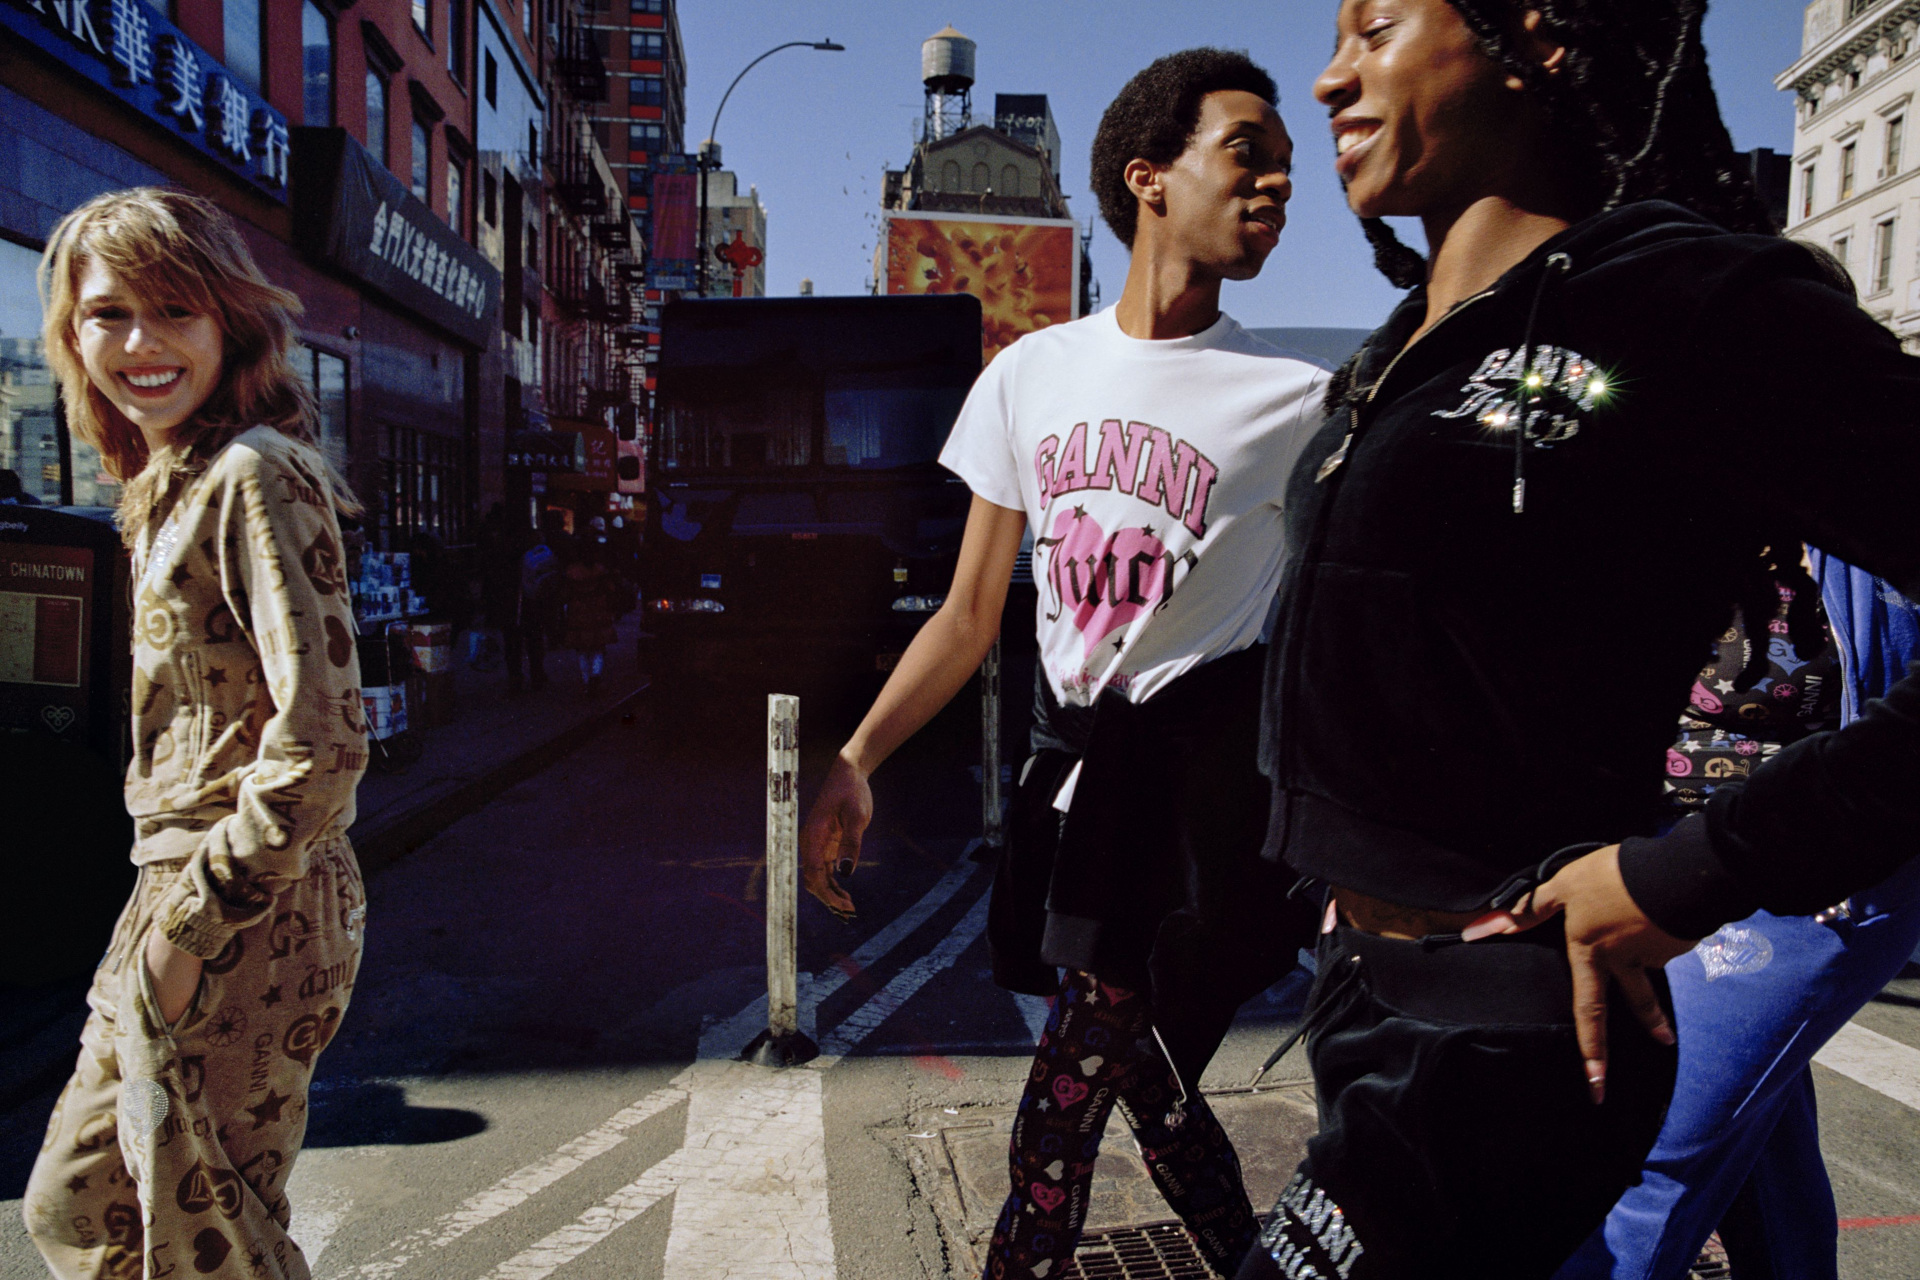 Models walking through New York wearing GANNI x Juicy Couture clothing